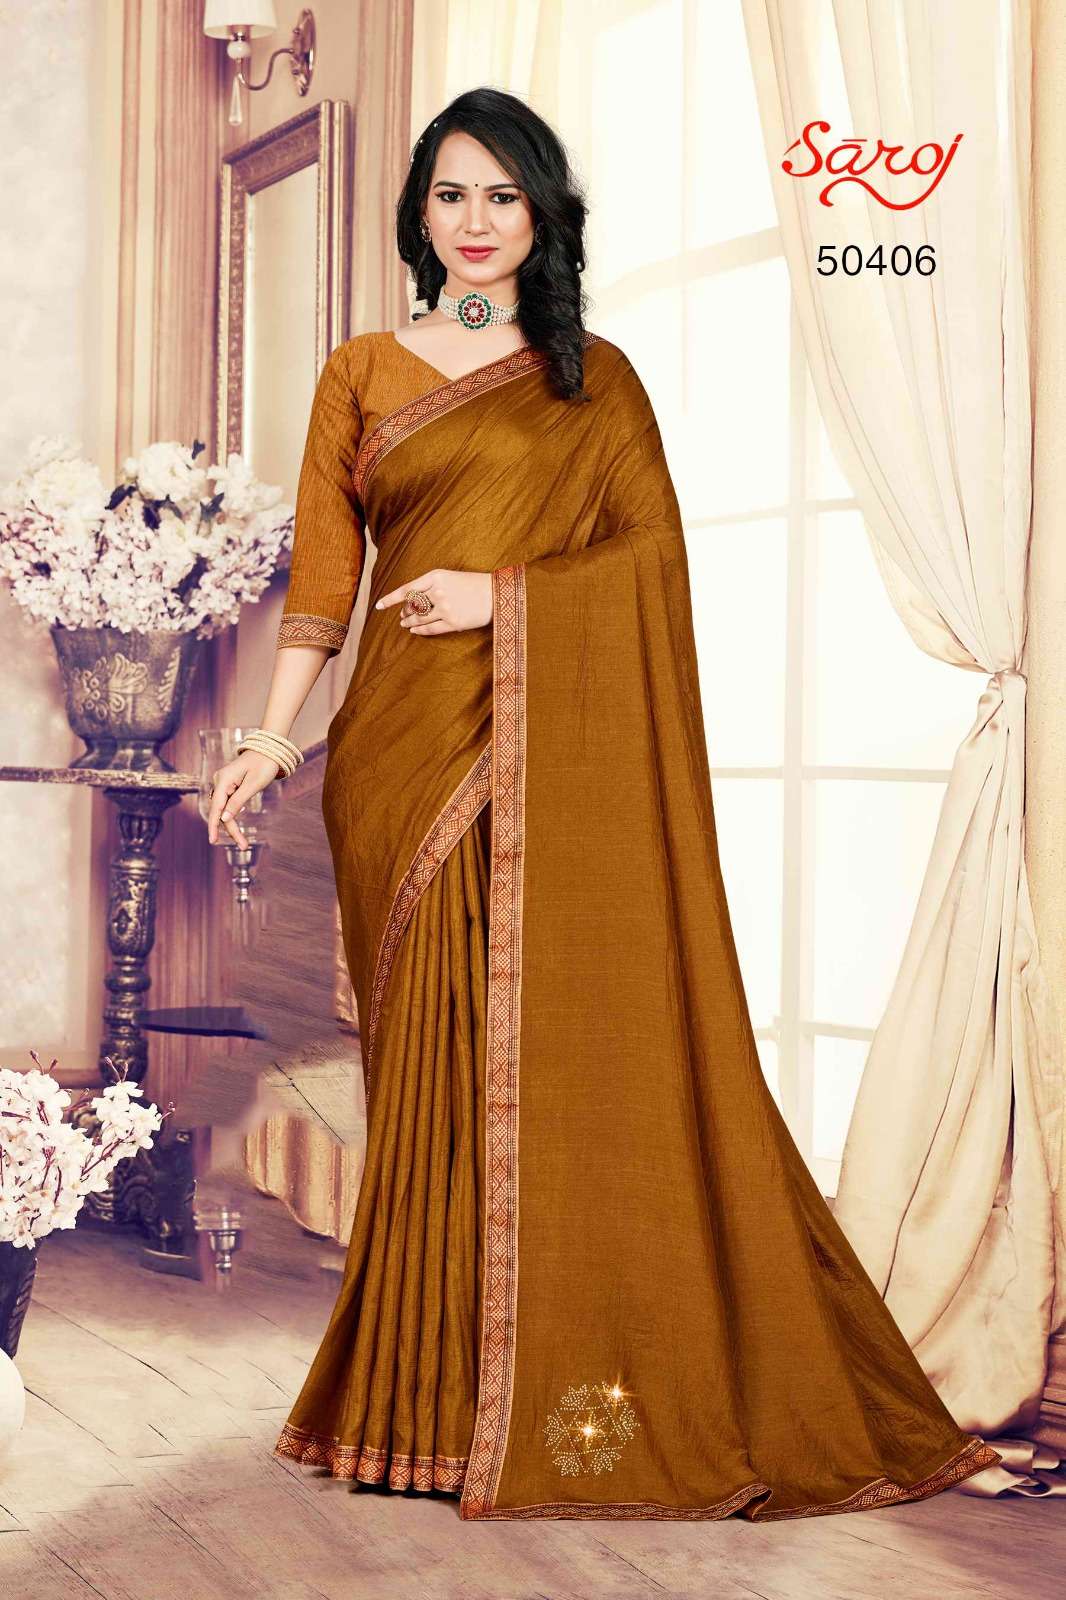 Saroj textile presents Fruit combo-1 Designer casual sarees catalogue